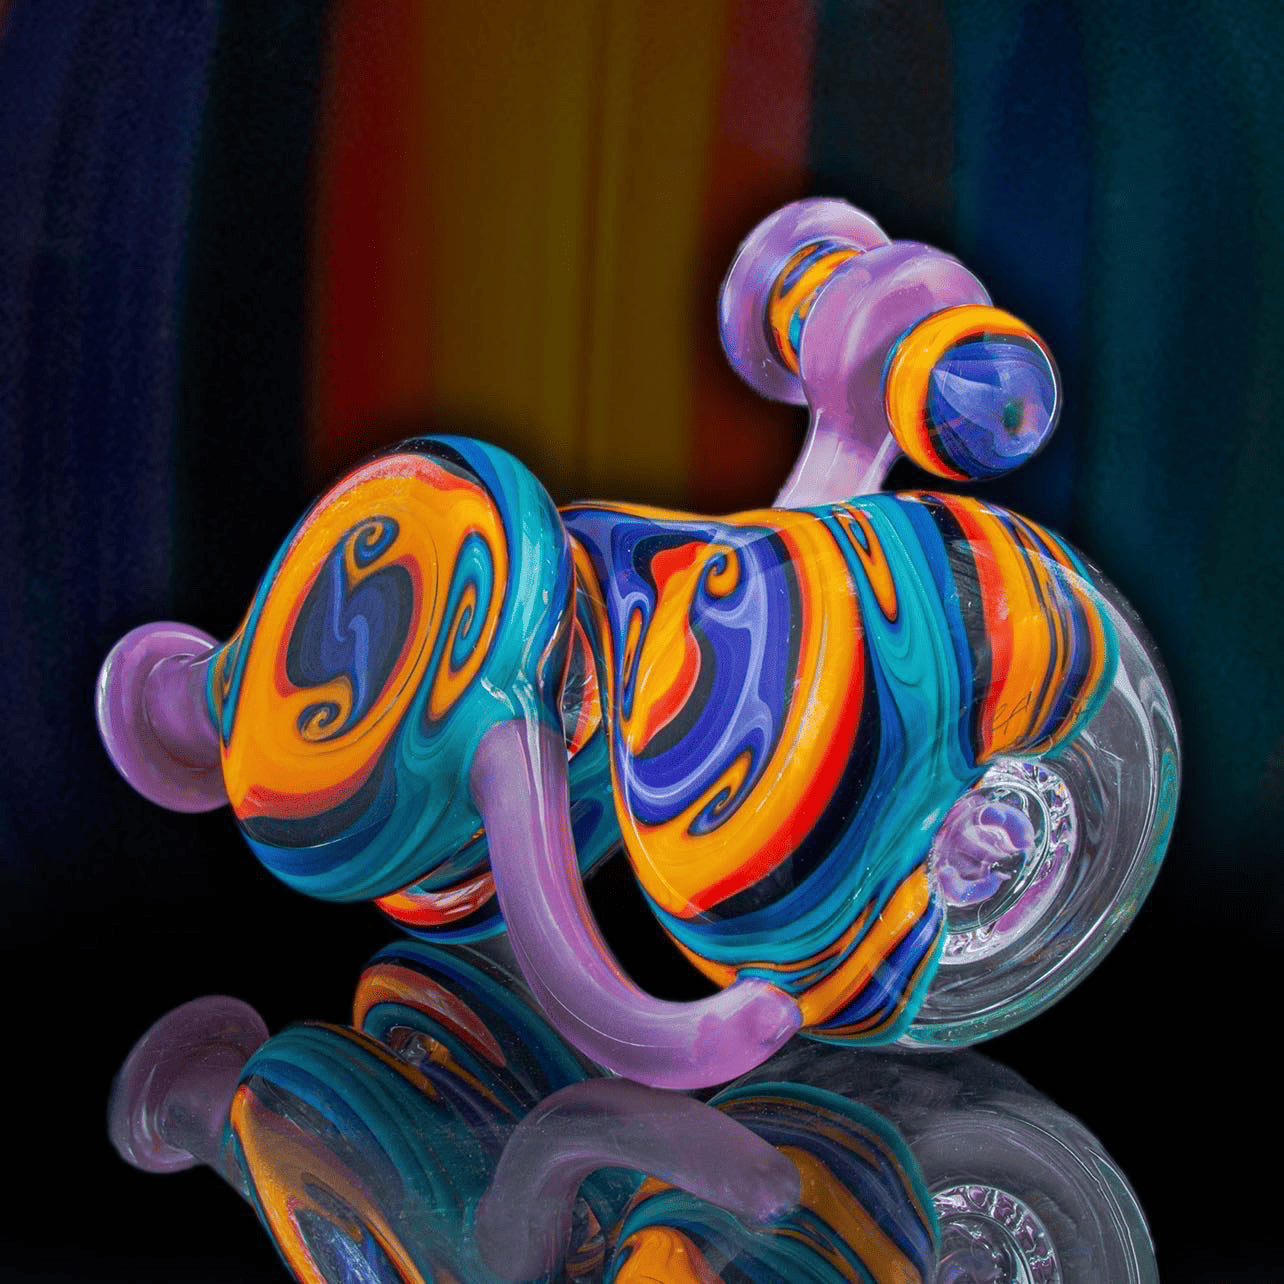 exquisite art piece - Infinity Bottle Collaboration by Earl Jr  x Leks Eno